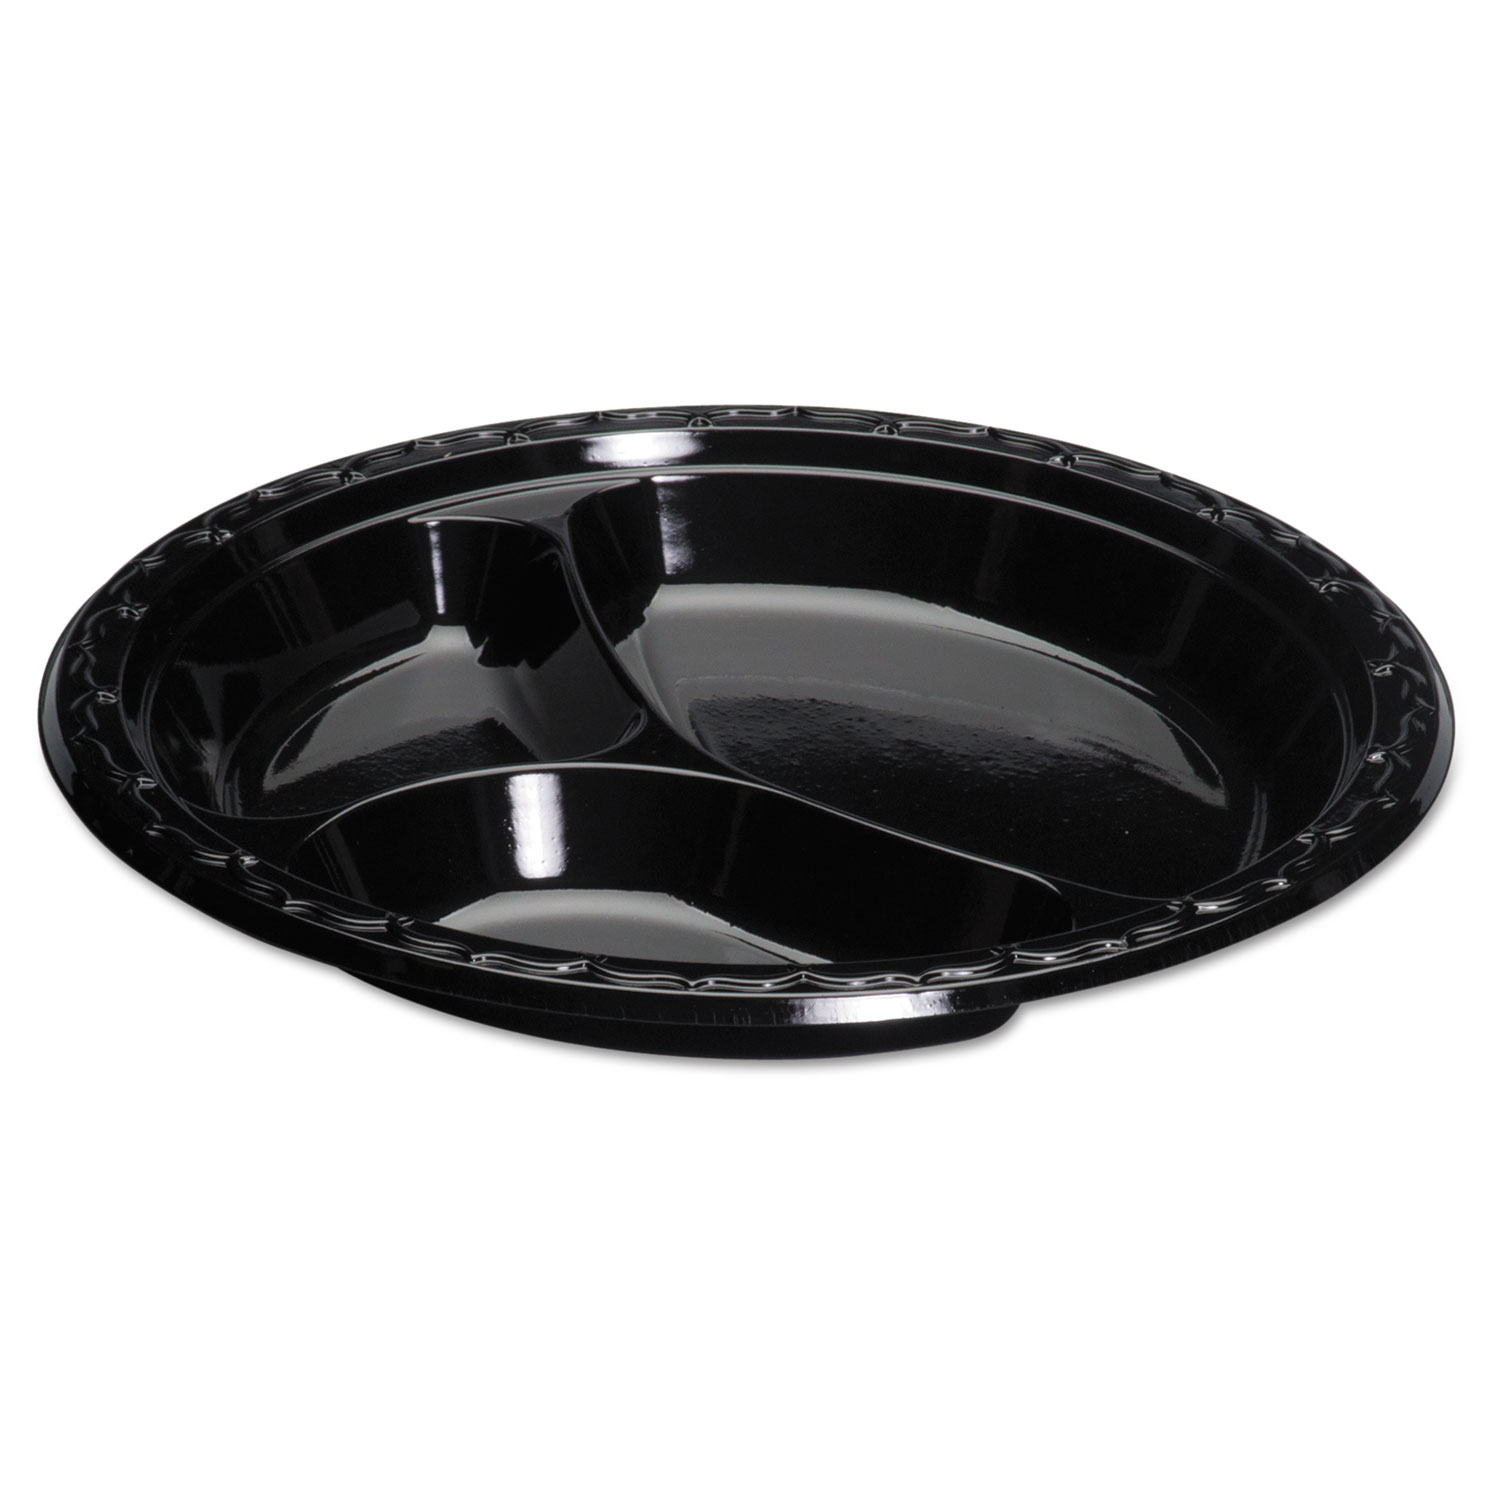  Genpak BLK13--- Silhouette Plastic Dinnerware, Plate, 10.25 in, Black, 100/PK, 4 PK/CT (GNPBLK13) 